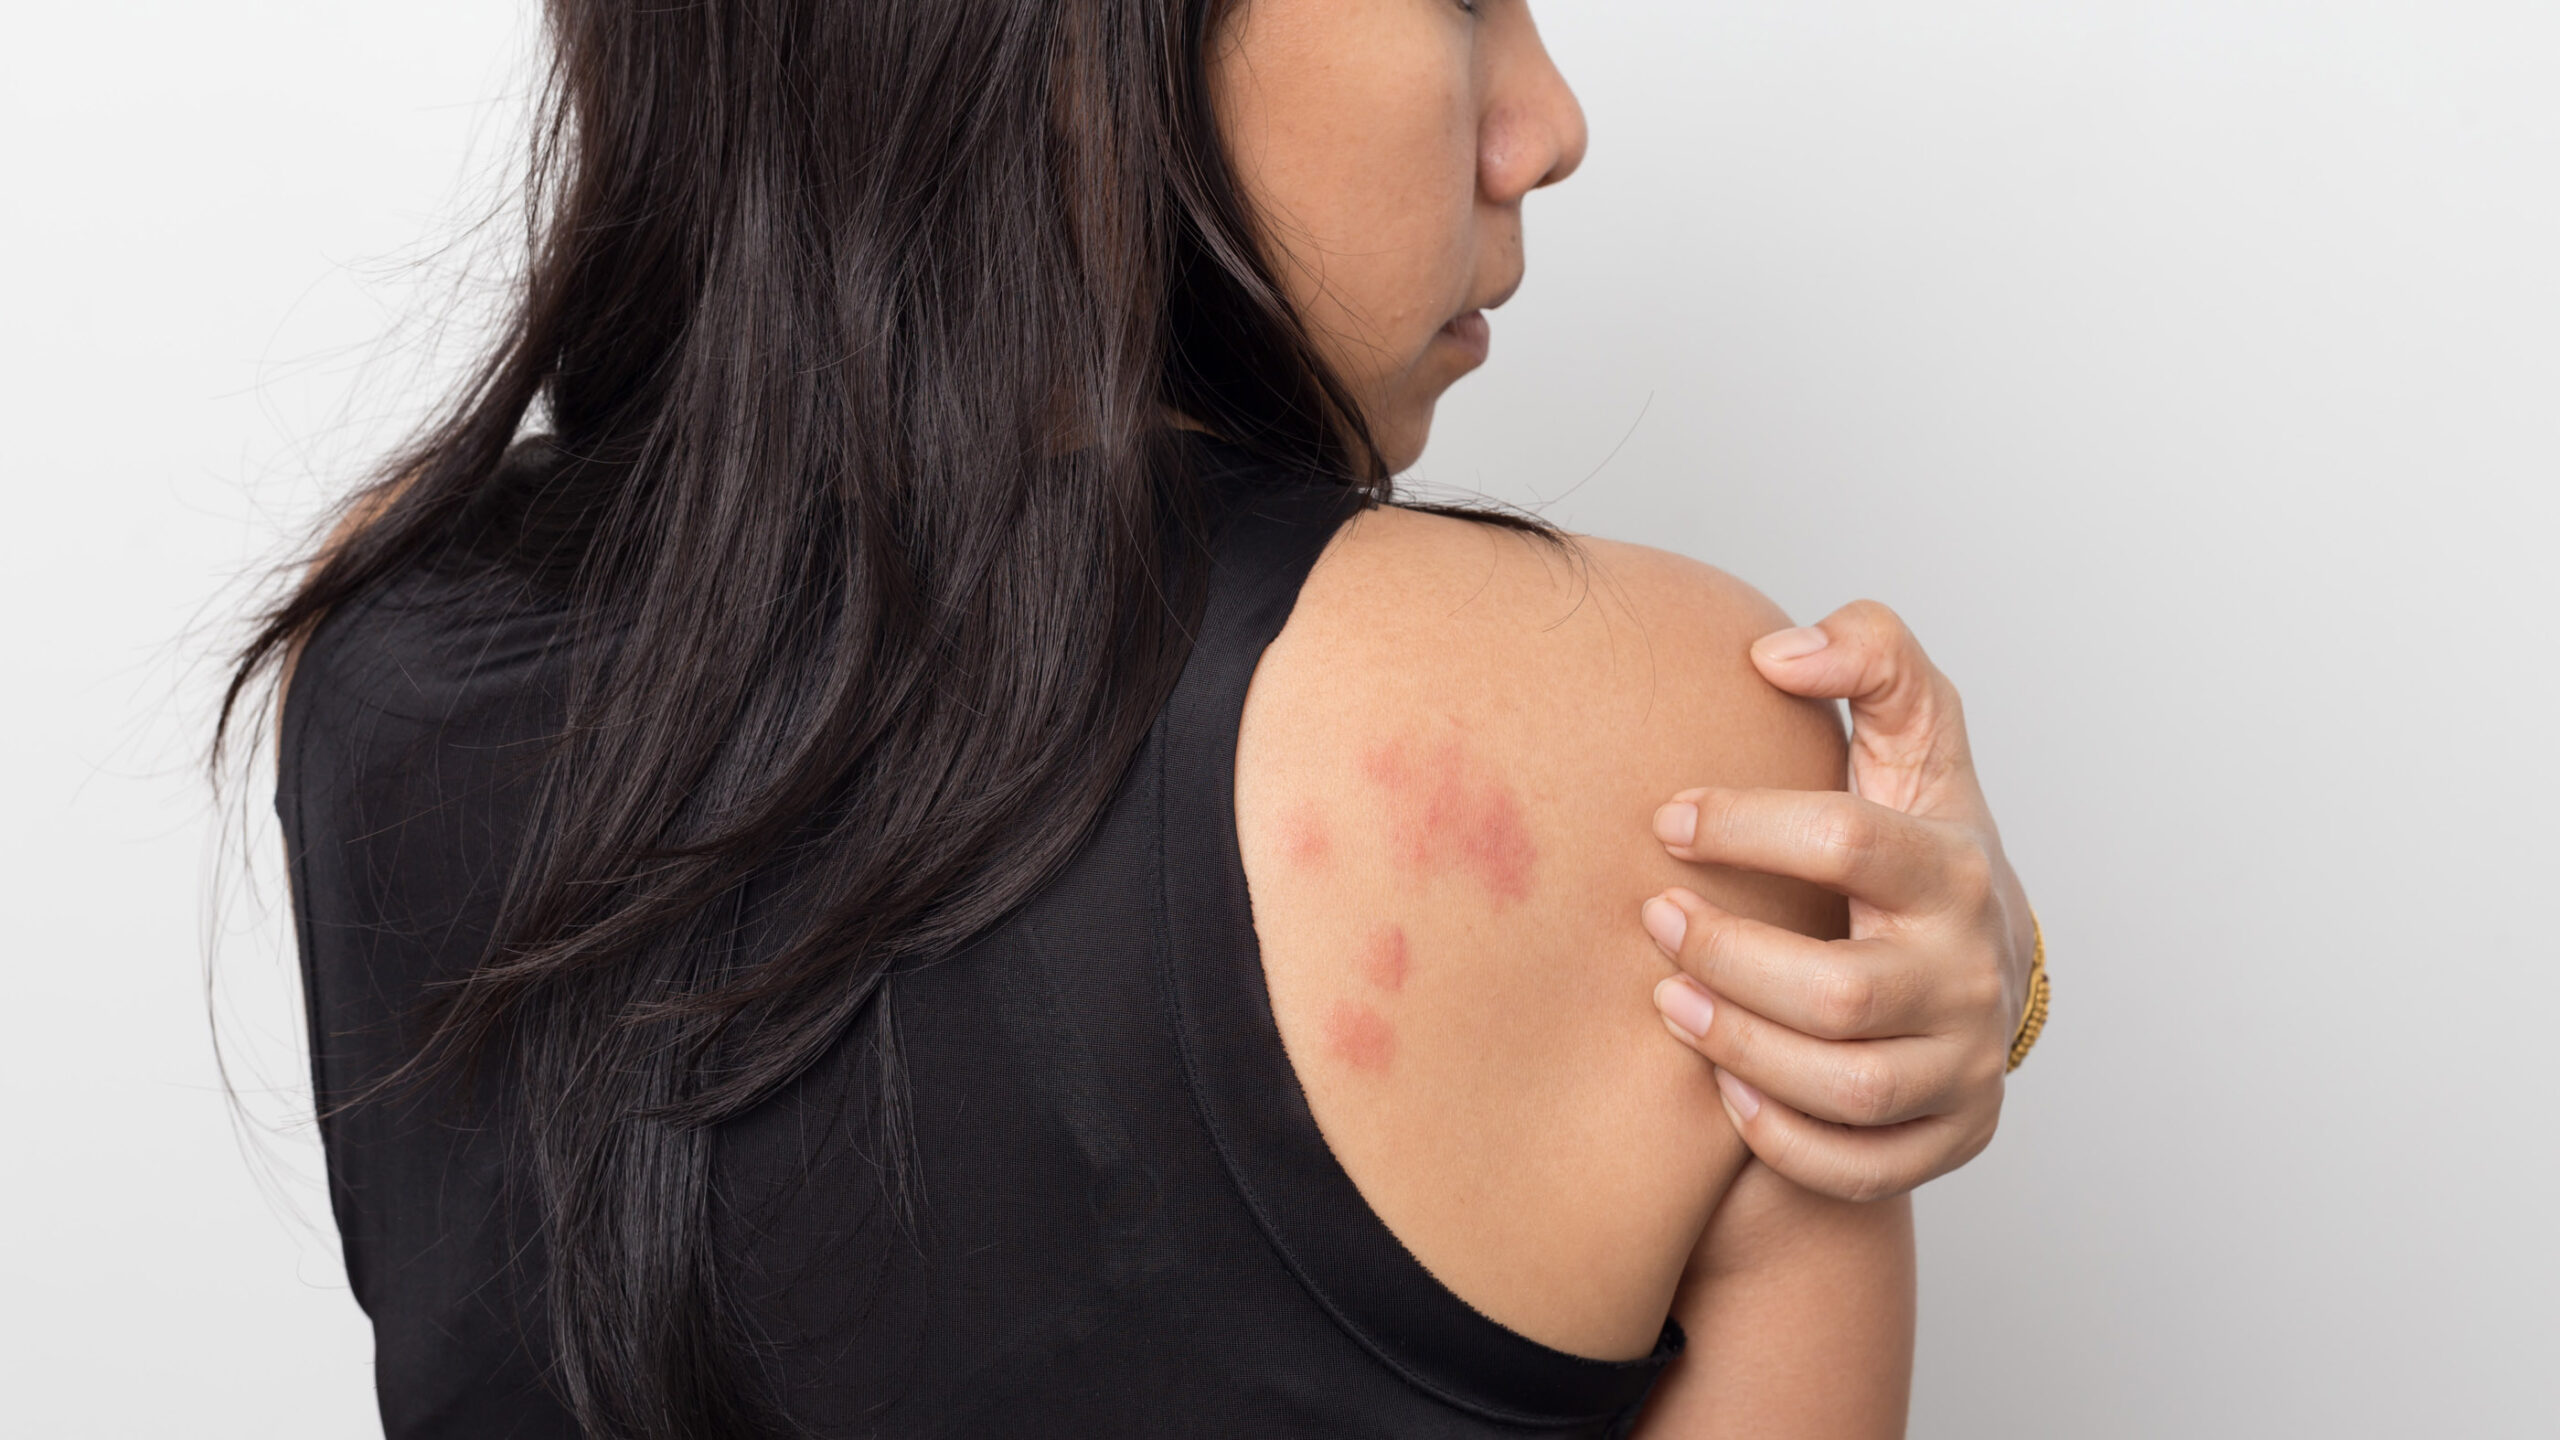 Can the coronavirus disease live on my skin?